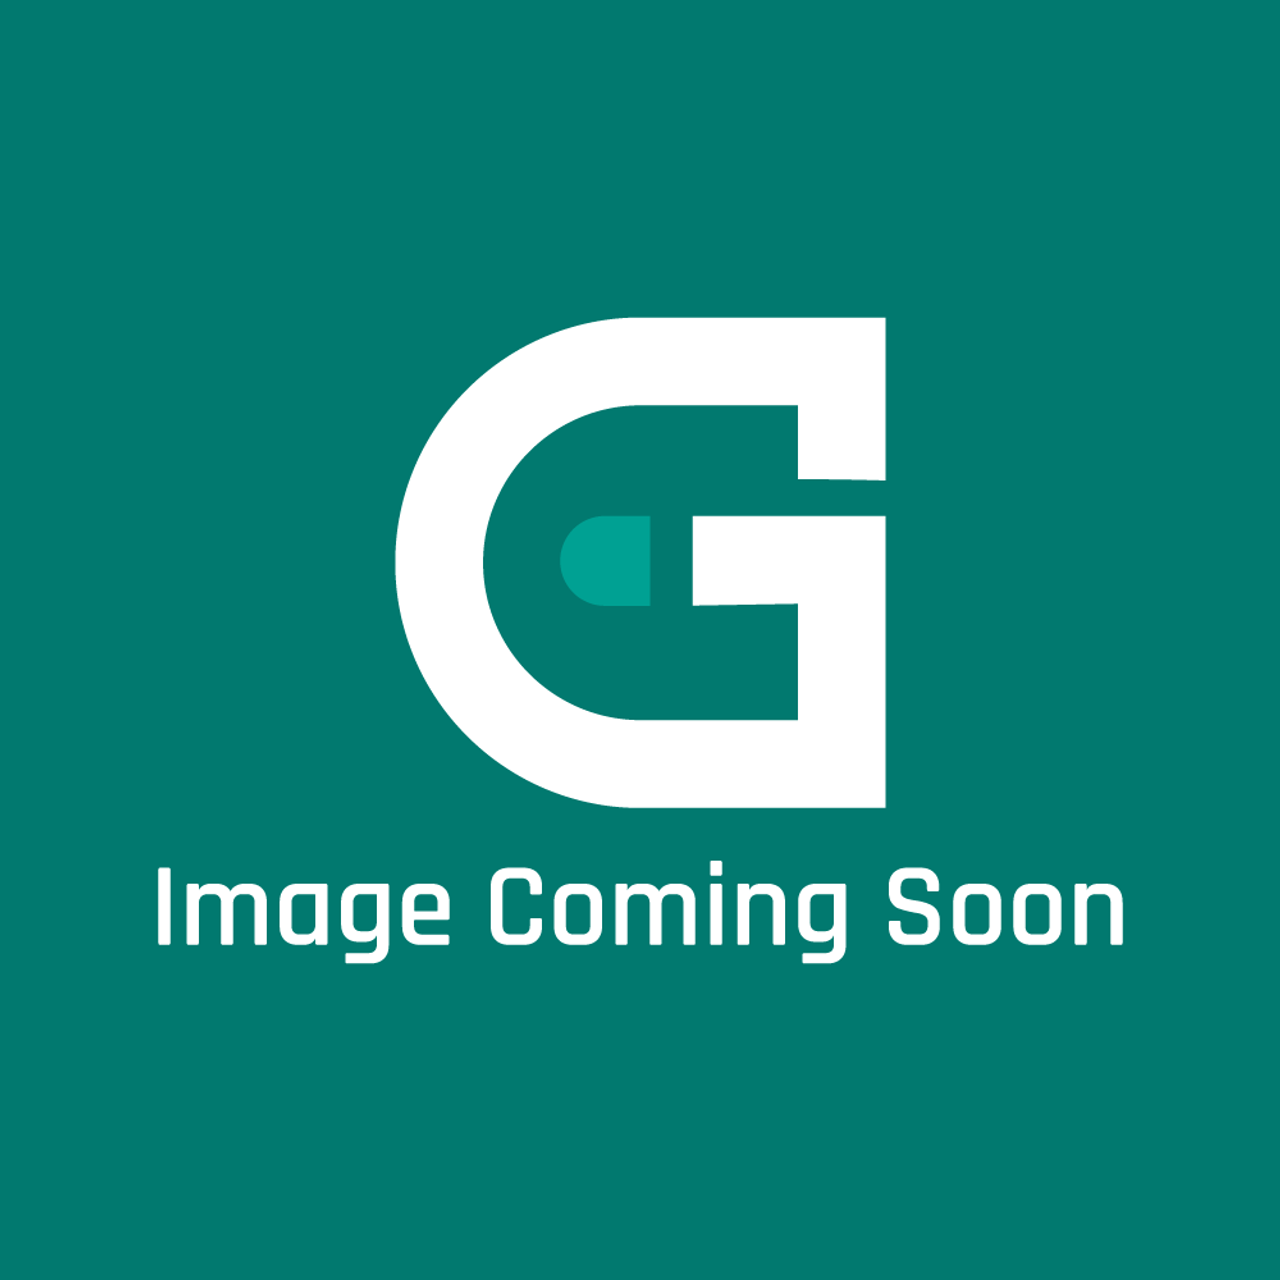 GE Appliances WR17X12679 - Snack Pan Shelf Fz - Image Coming Soon!